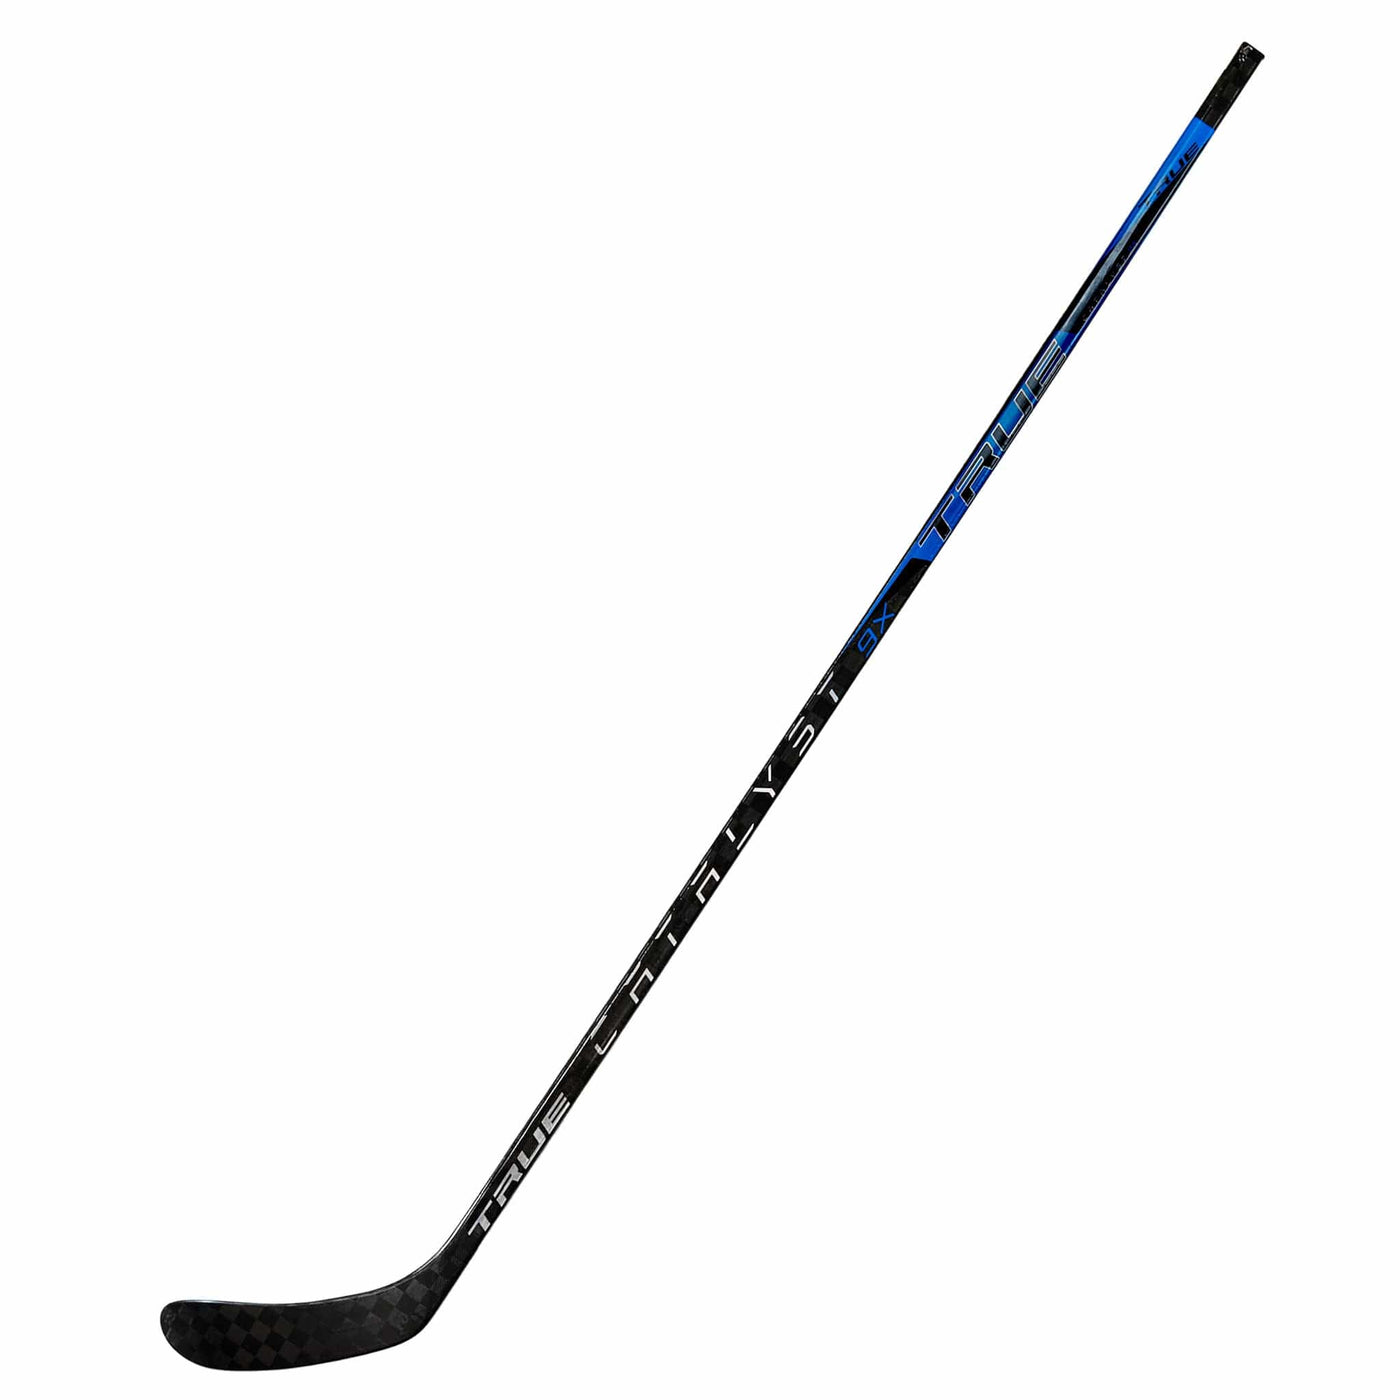 TRUE Catalyst 9X Pro Stock Senior Hockey Stick - Alex Edler - The Hockey Shop Source For Sports